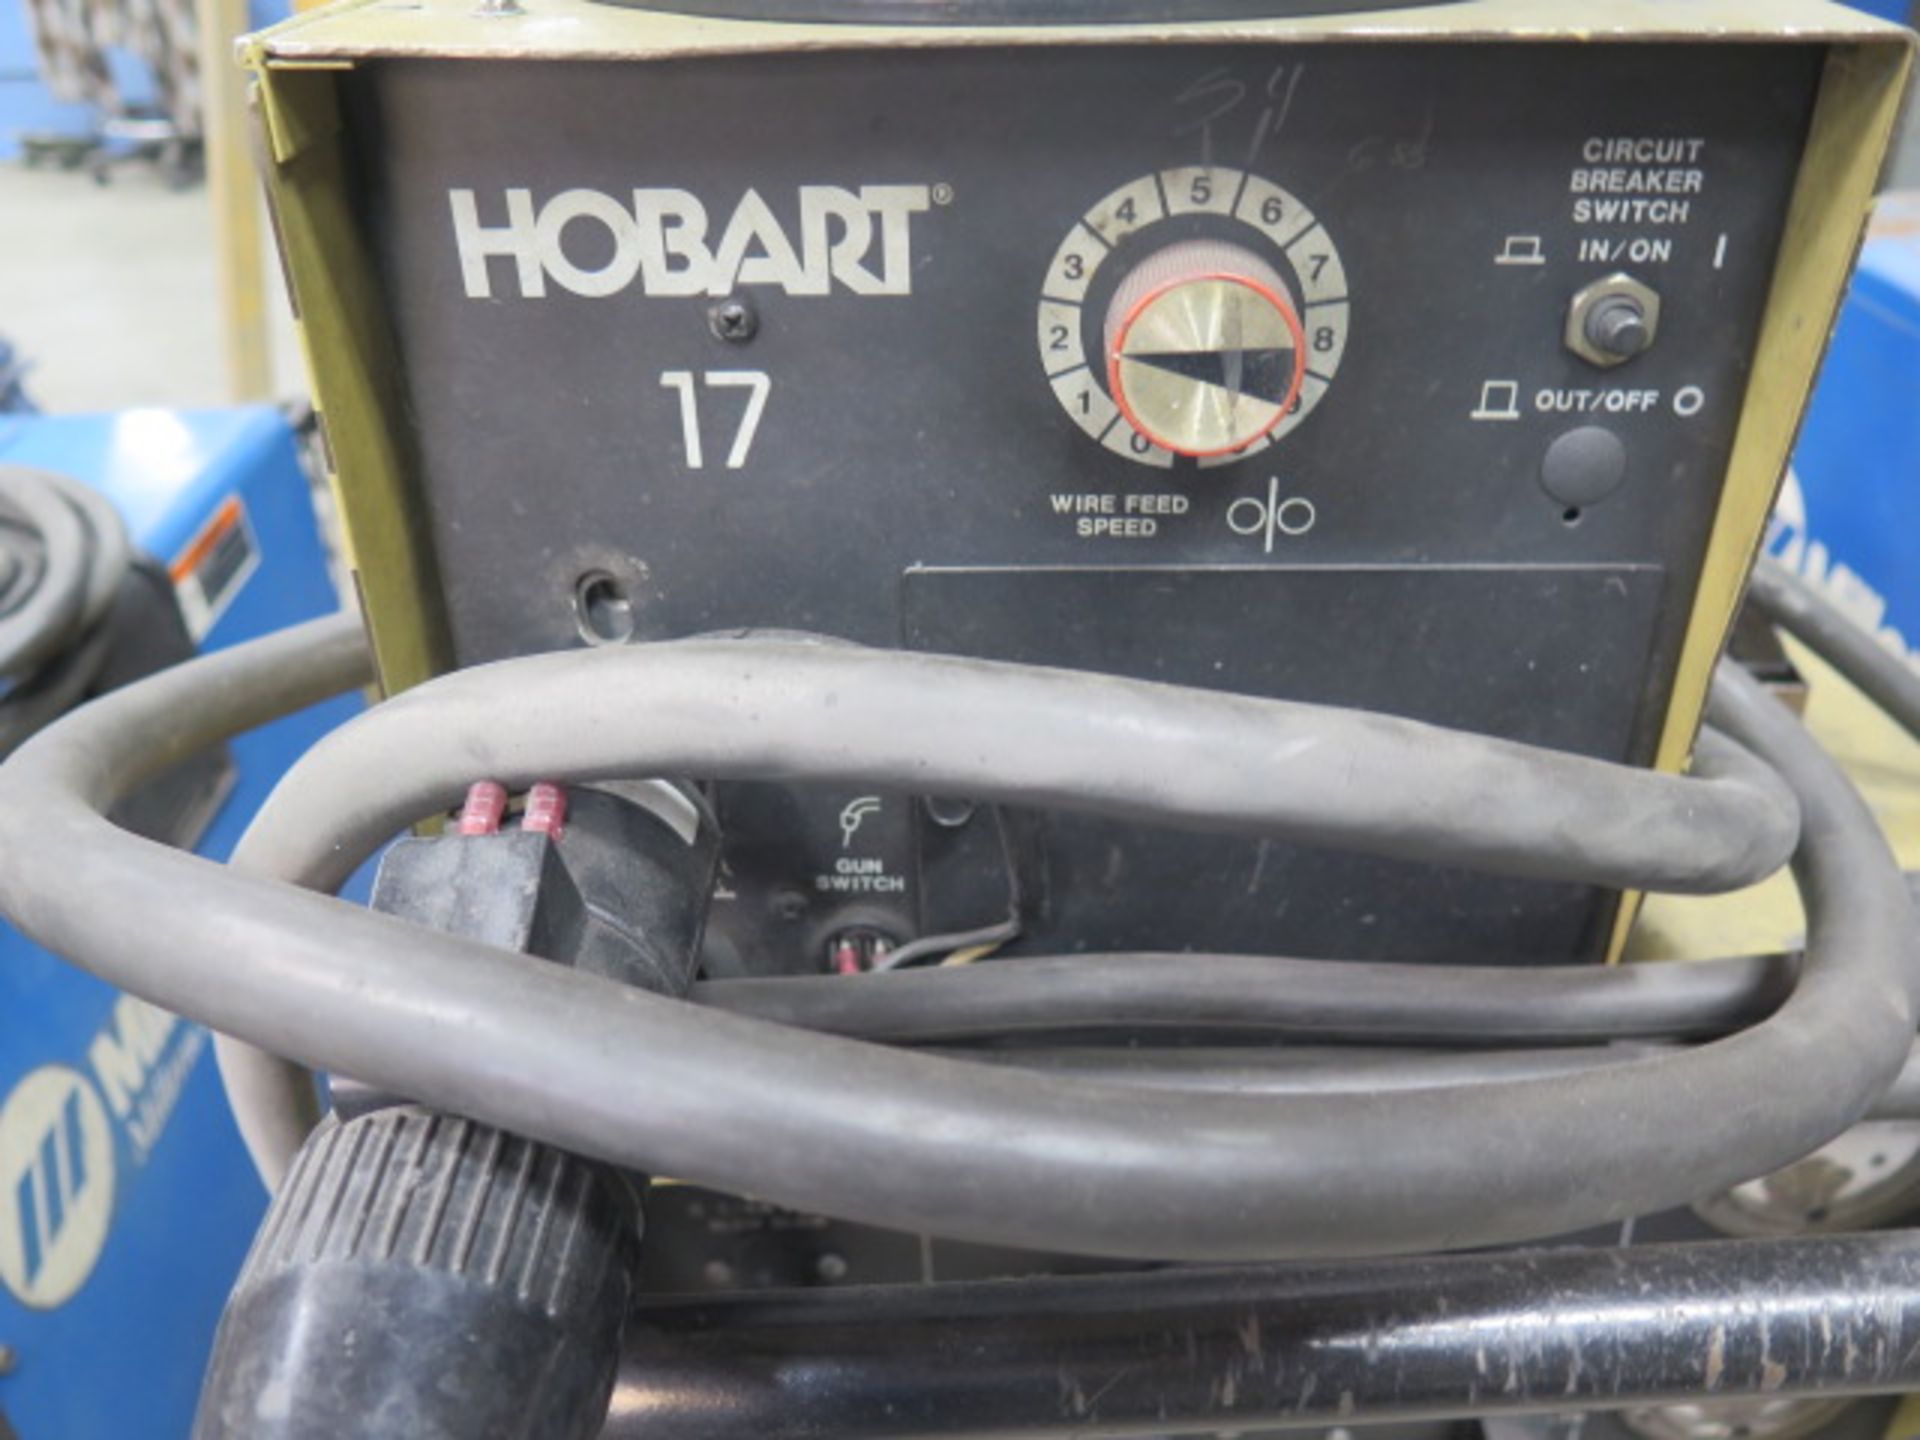 Hobart "Fabricator" Arc Welding Power Source s/n 91WS05469 w/ Hobart 17 Wire Feeder - Image 3 of 4